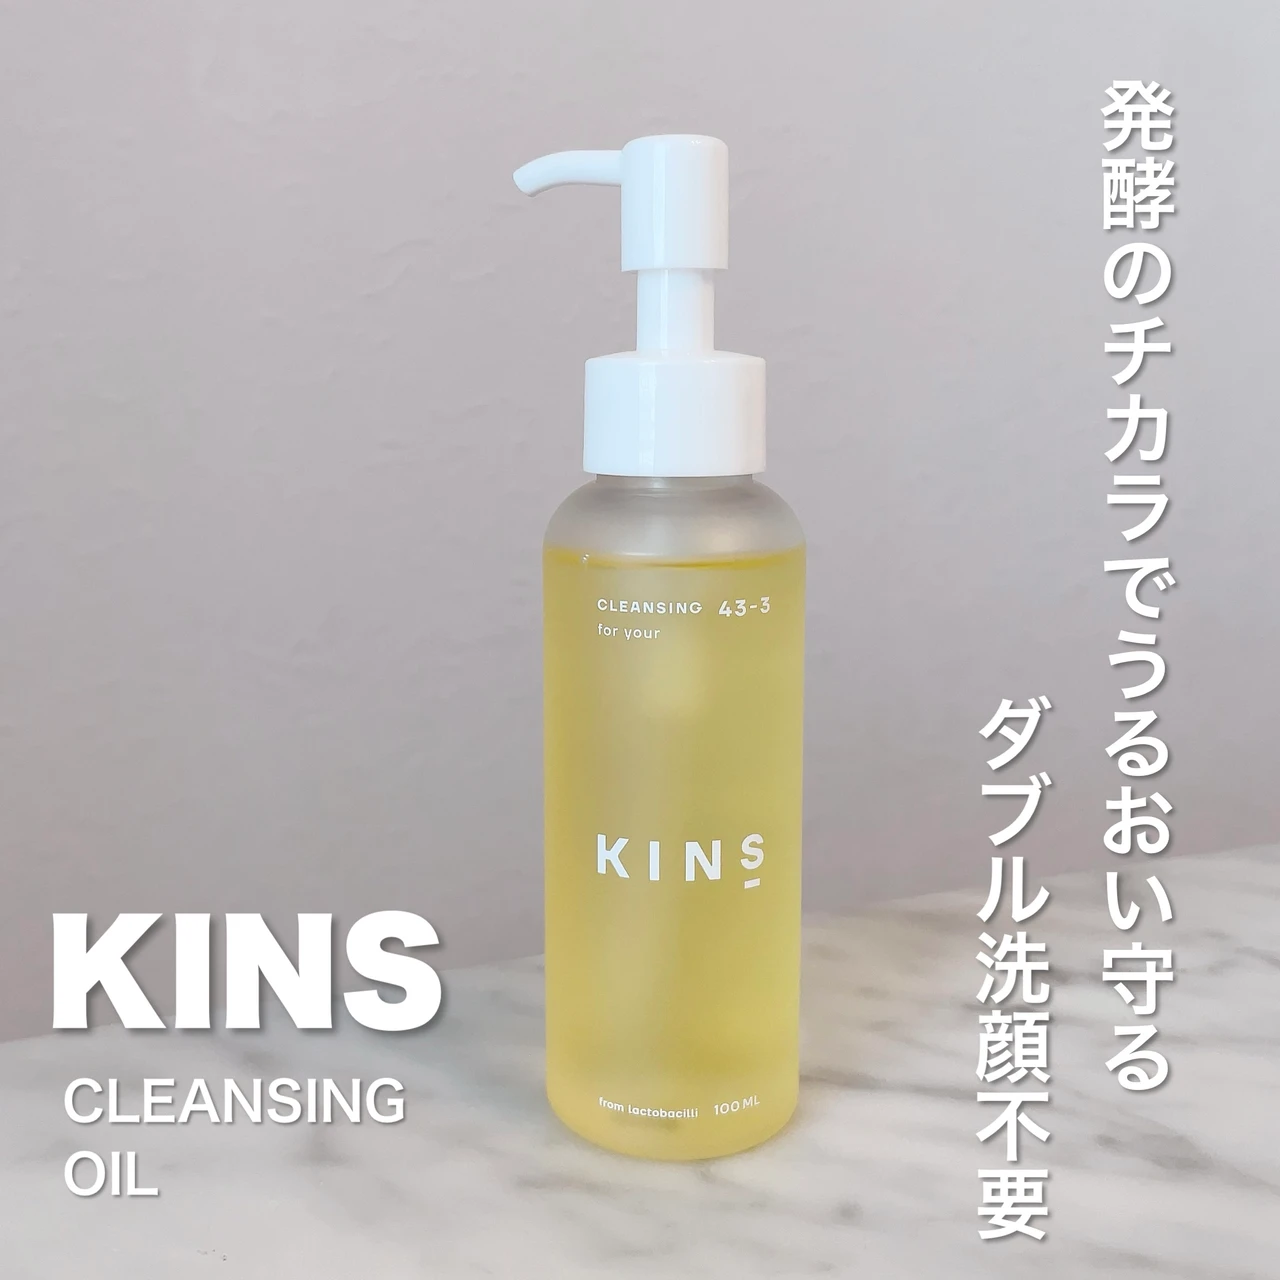 【KINS CLEANSING OIL】